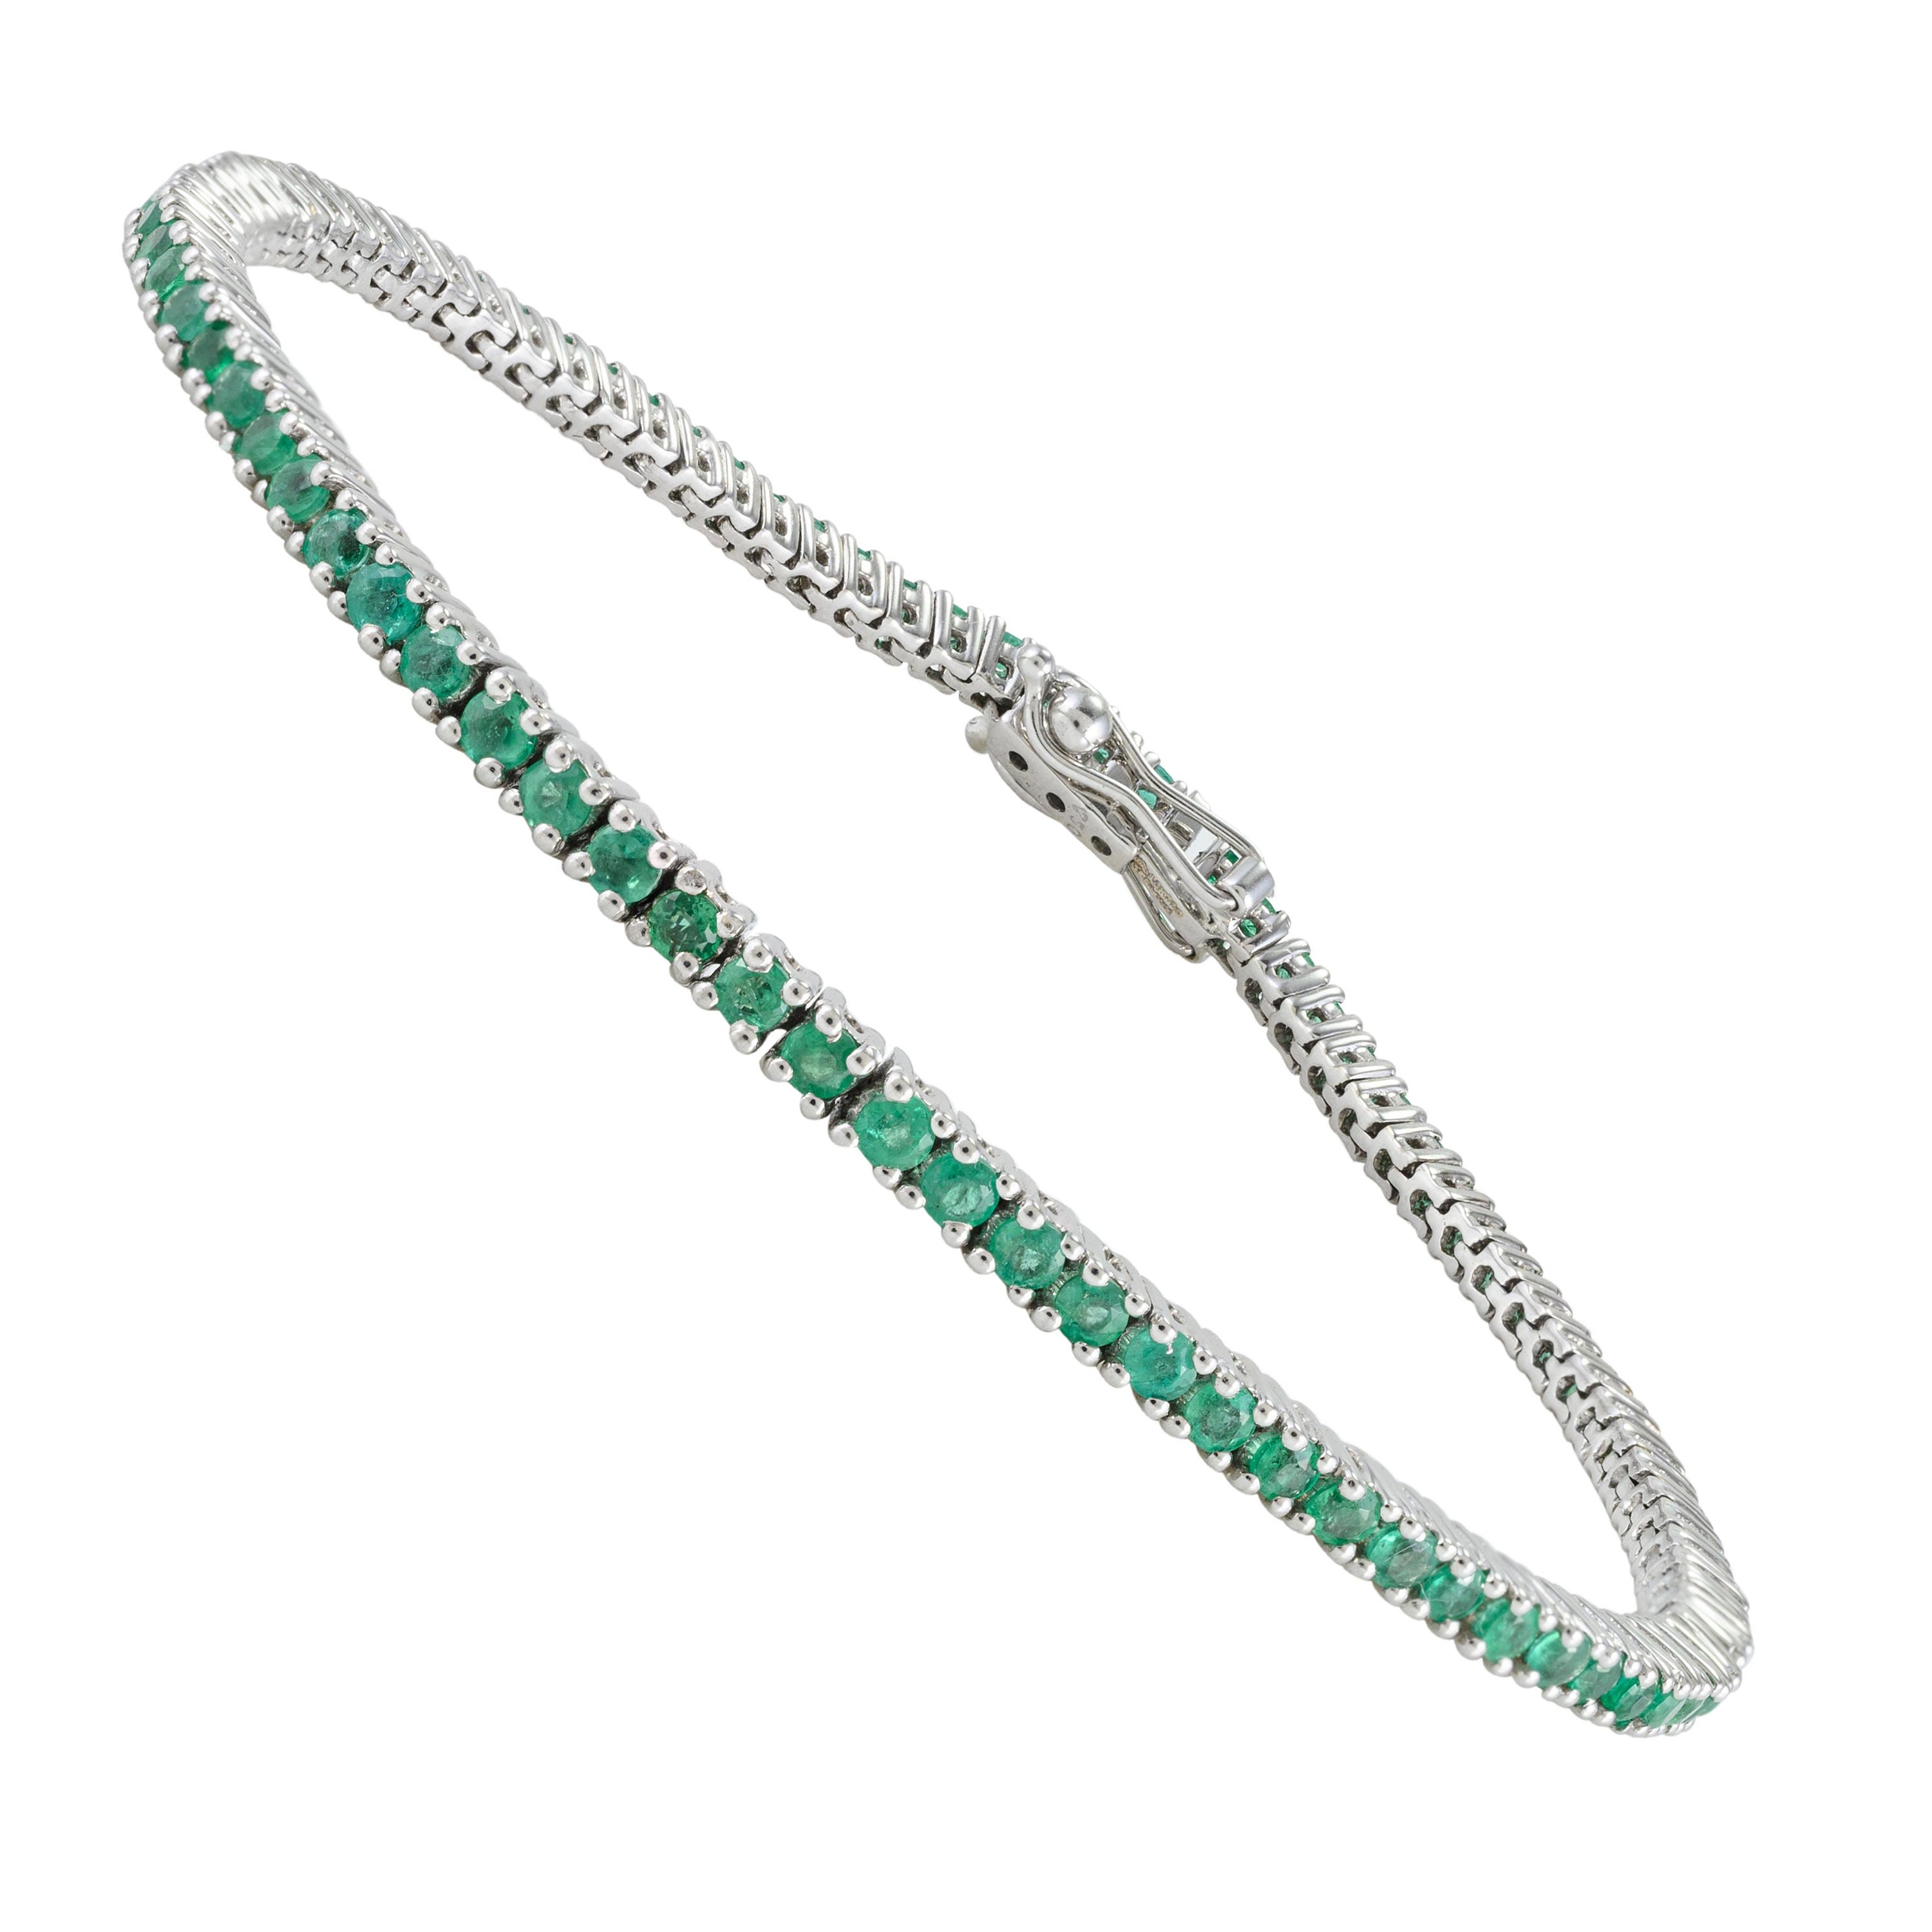 2.1 Carat Dainty Green Emerald Gemstone Sleek Tennis Bracelet in 18k White Gold For Sale